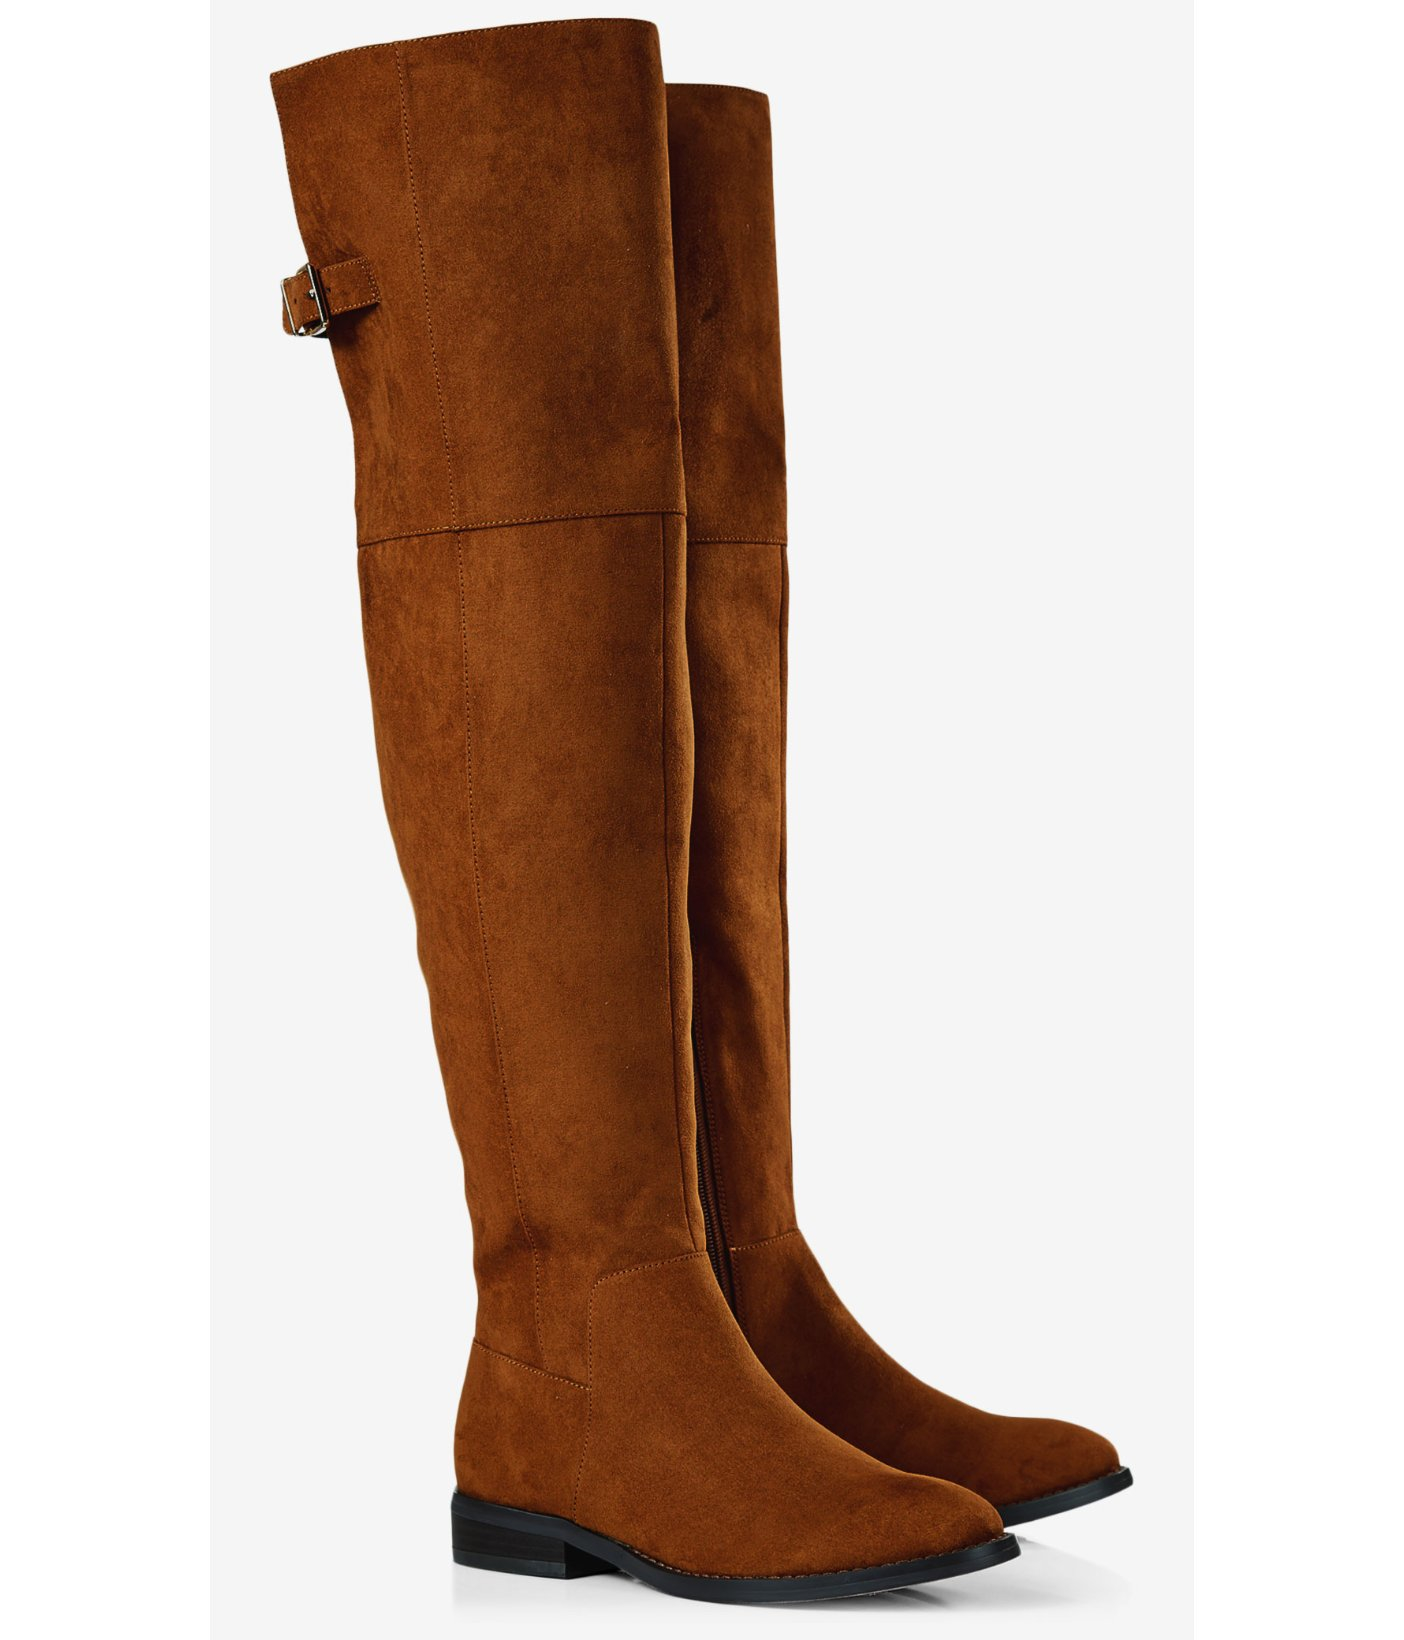 Buy > trendy brown boots > in stock